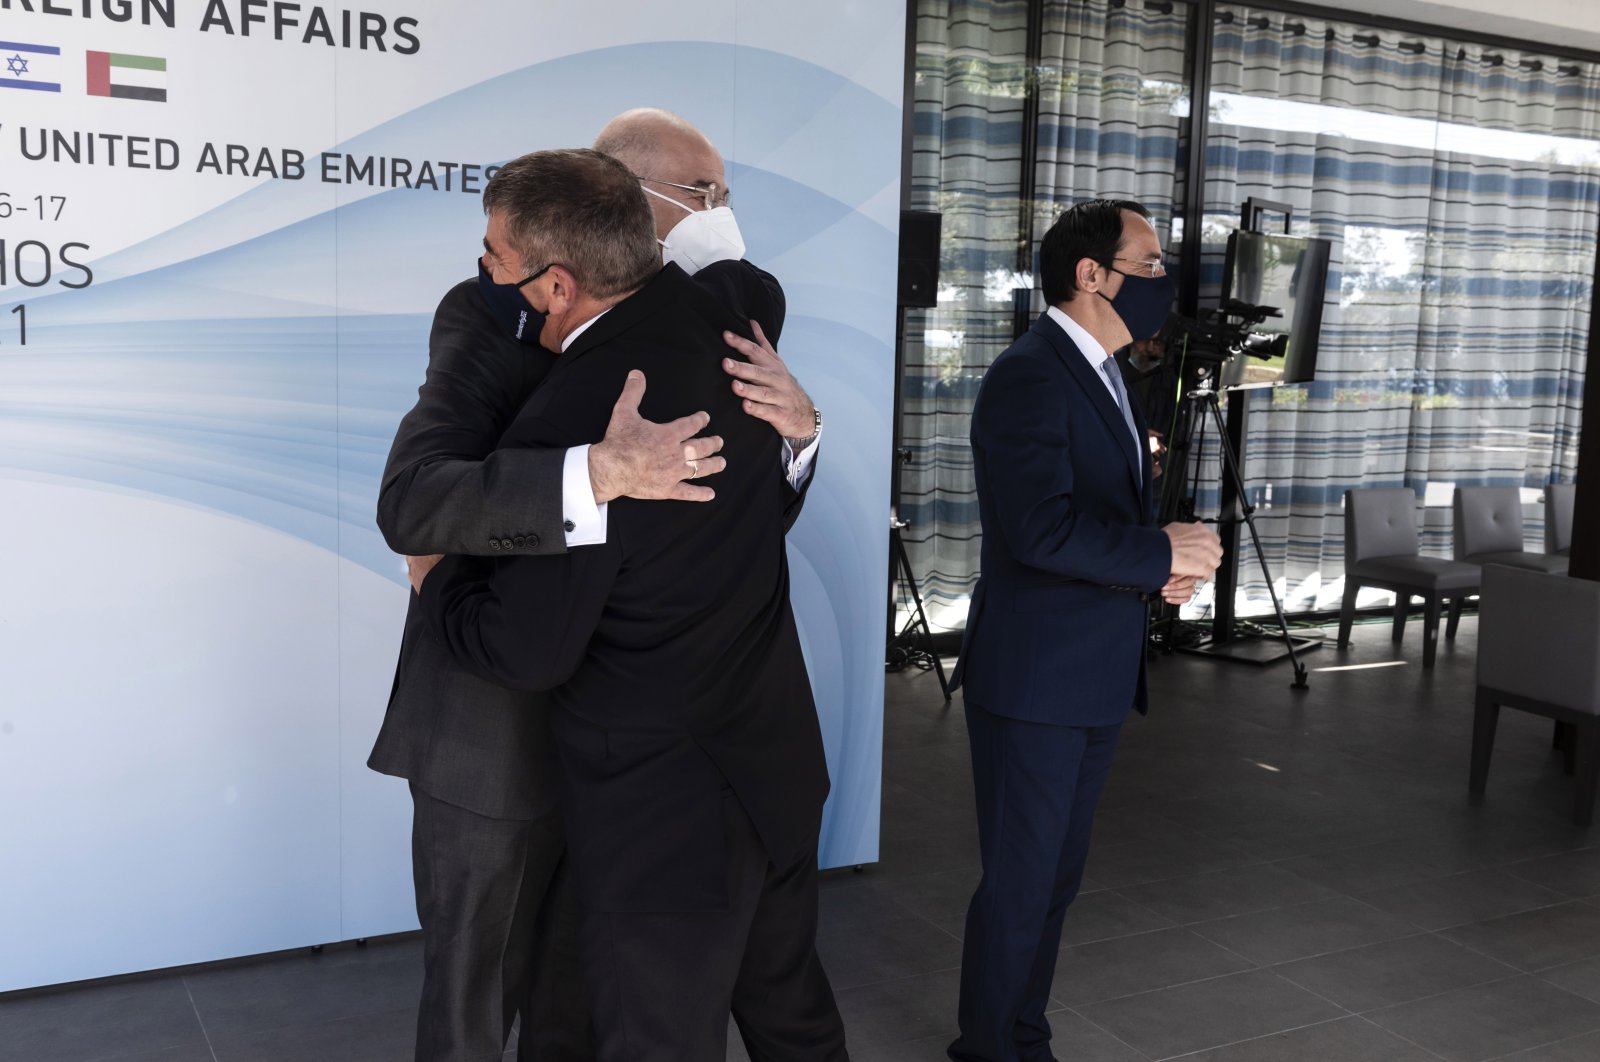 Greek Foreign Minister Nikos Dendias (L, back) hugs Israeli Foreign Minister Gabi Ashkenazi at a meeting in Paphos, Greece Cyprus, April 16, 2021. (EPA Photo)